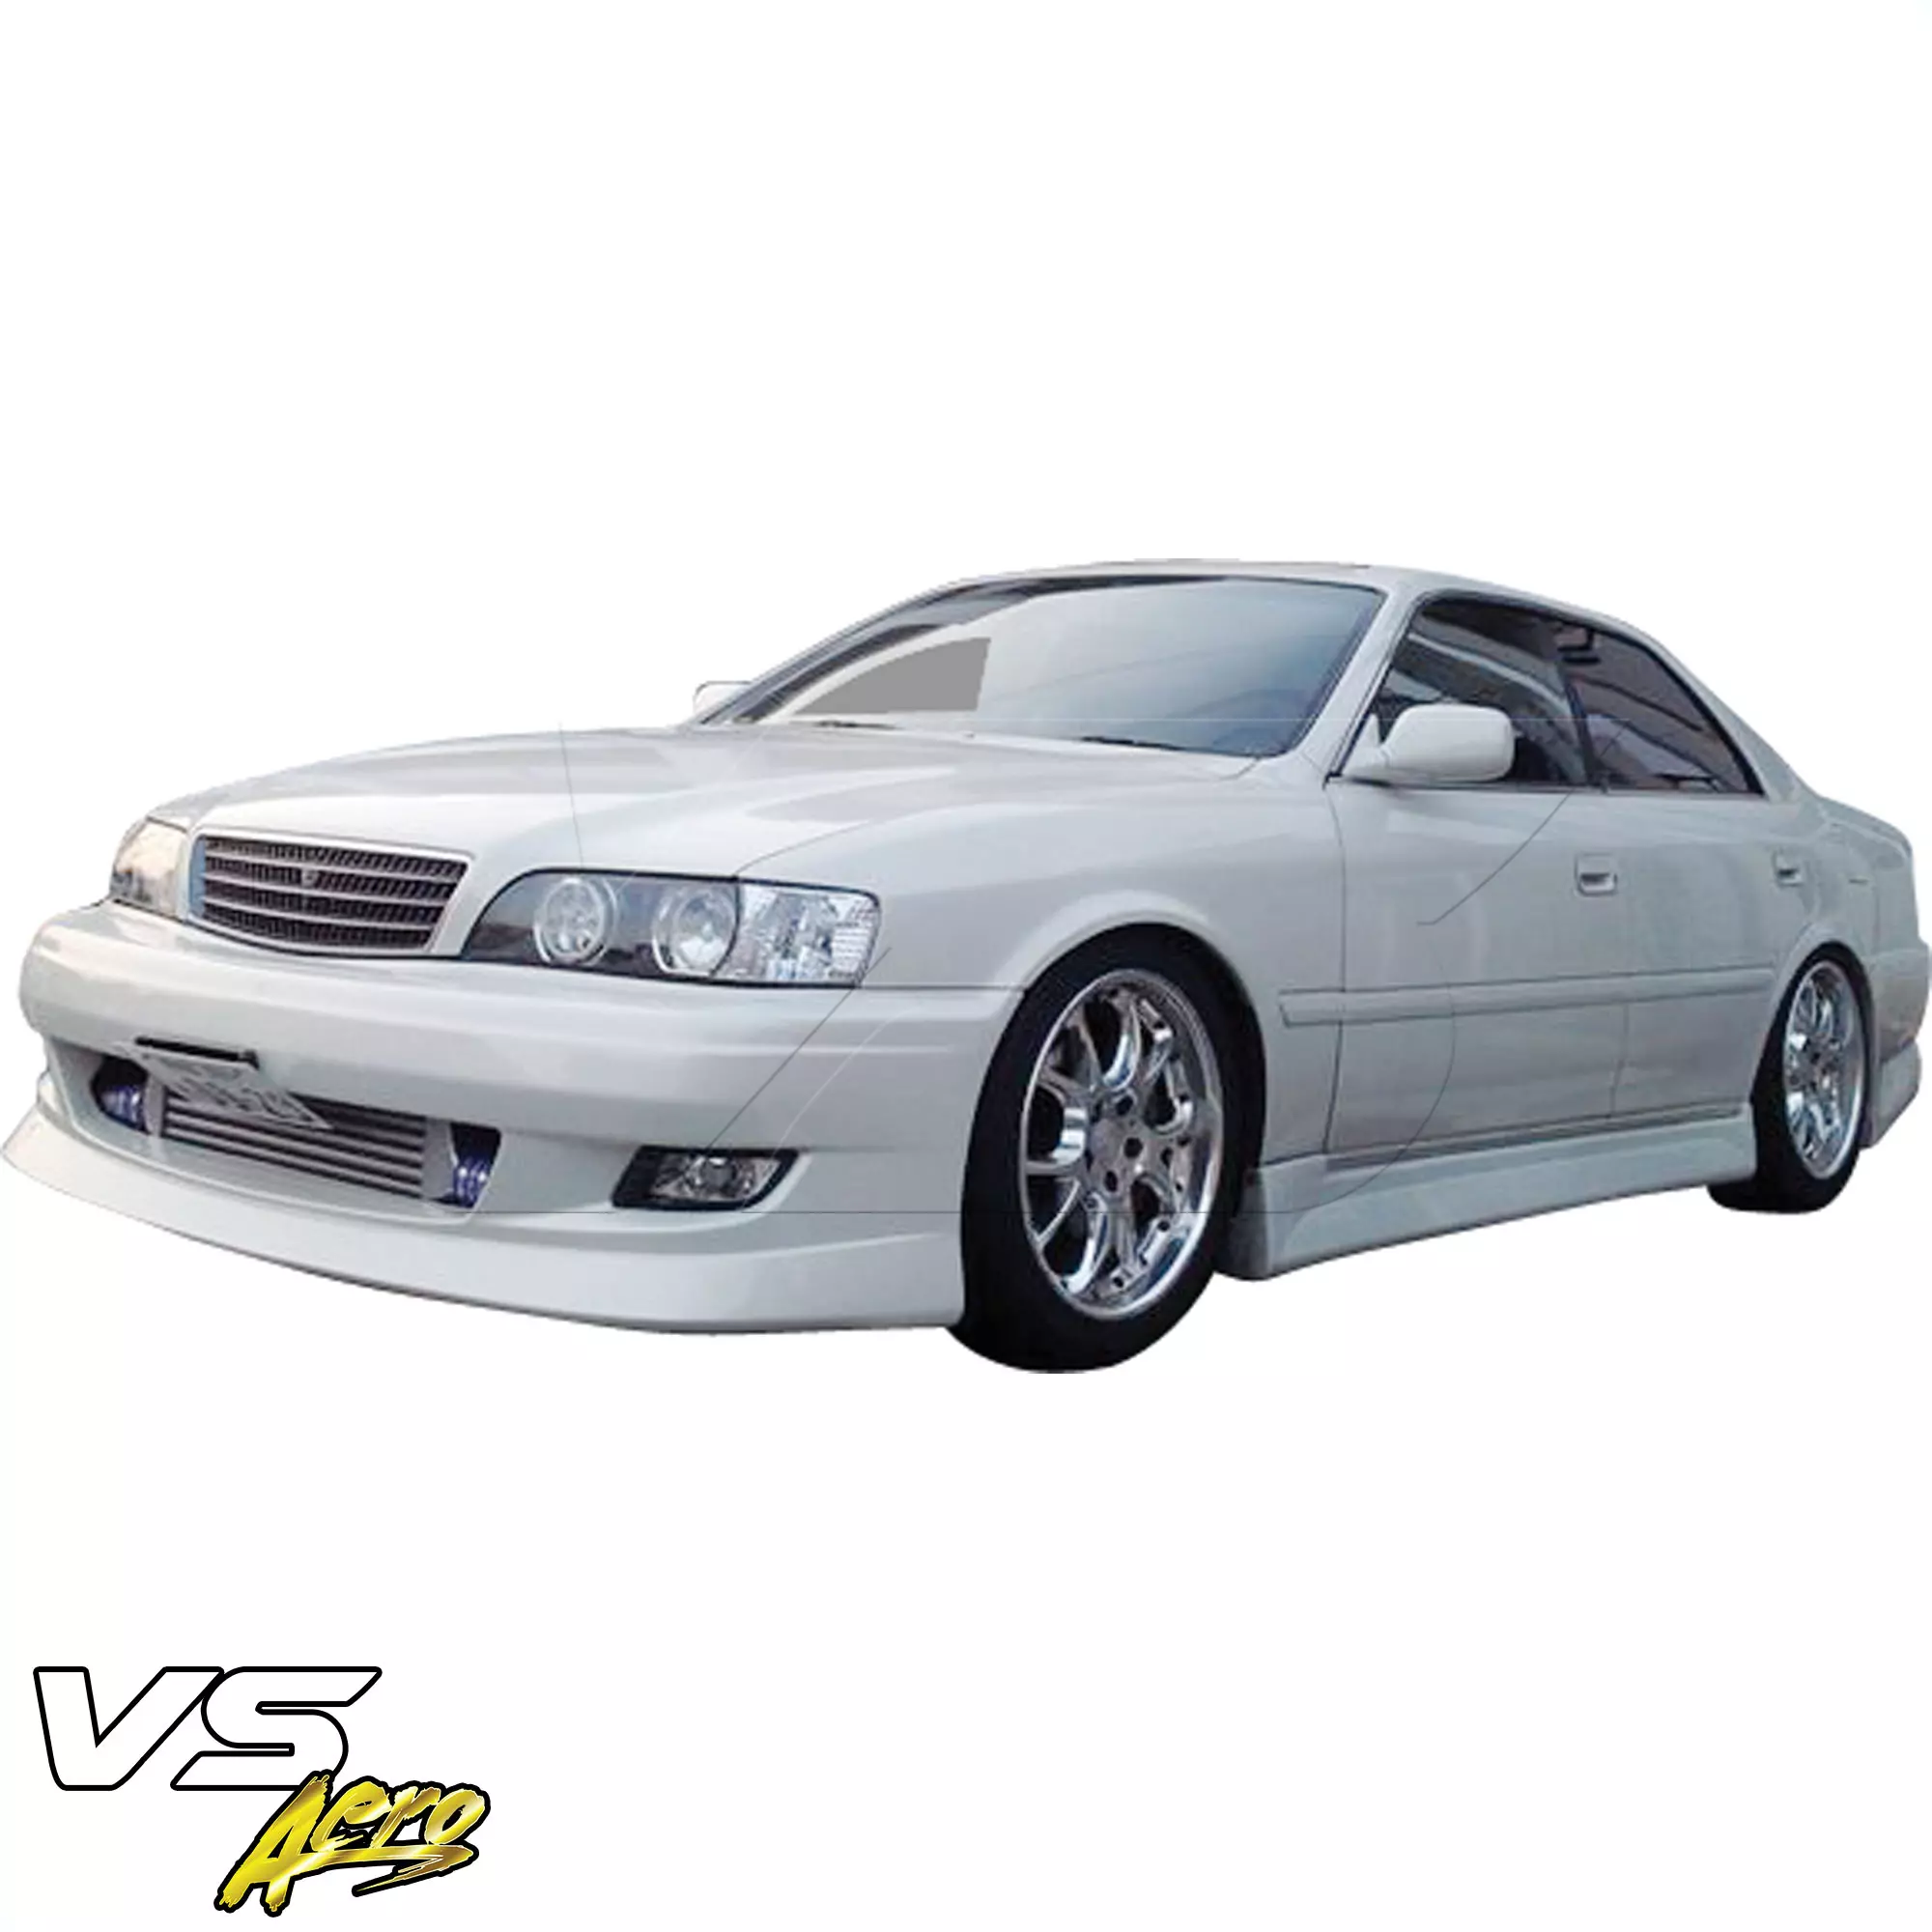 VSaero FRP URA vL Body Kit 4pc > Toyota Chaser JZX100 1996-2000 - Image 22